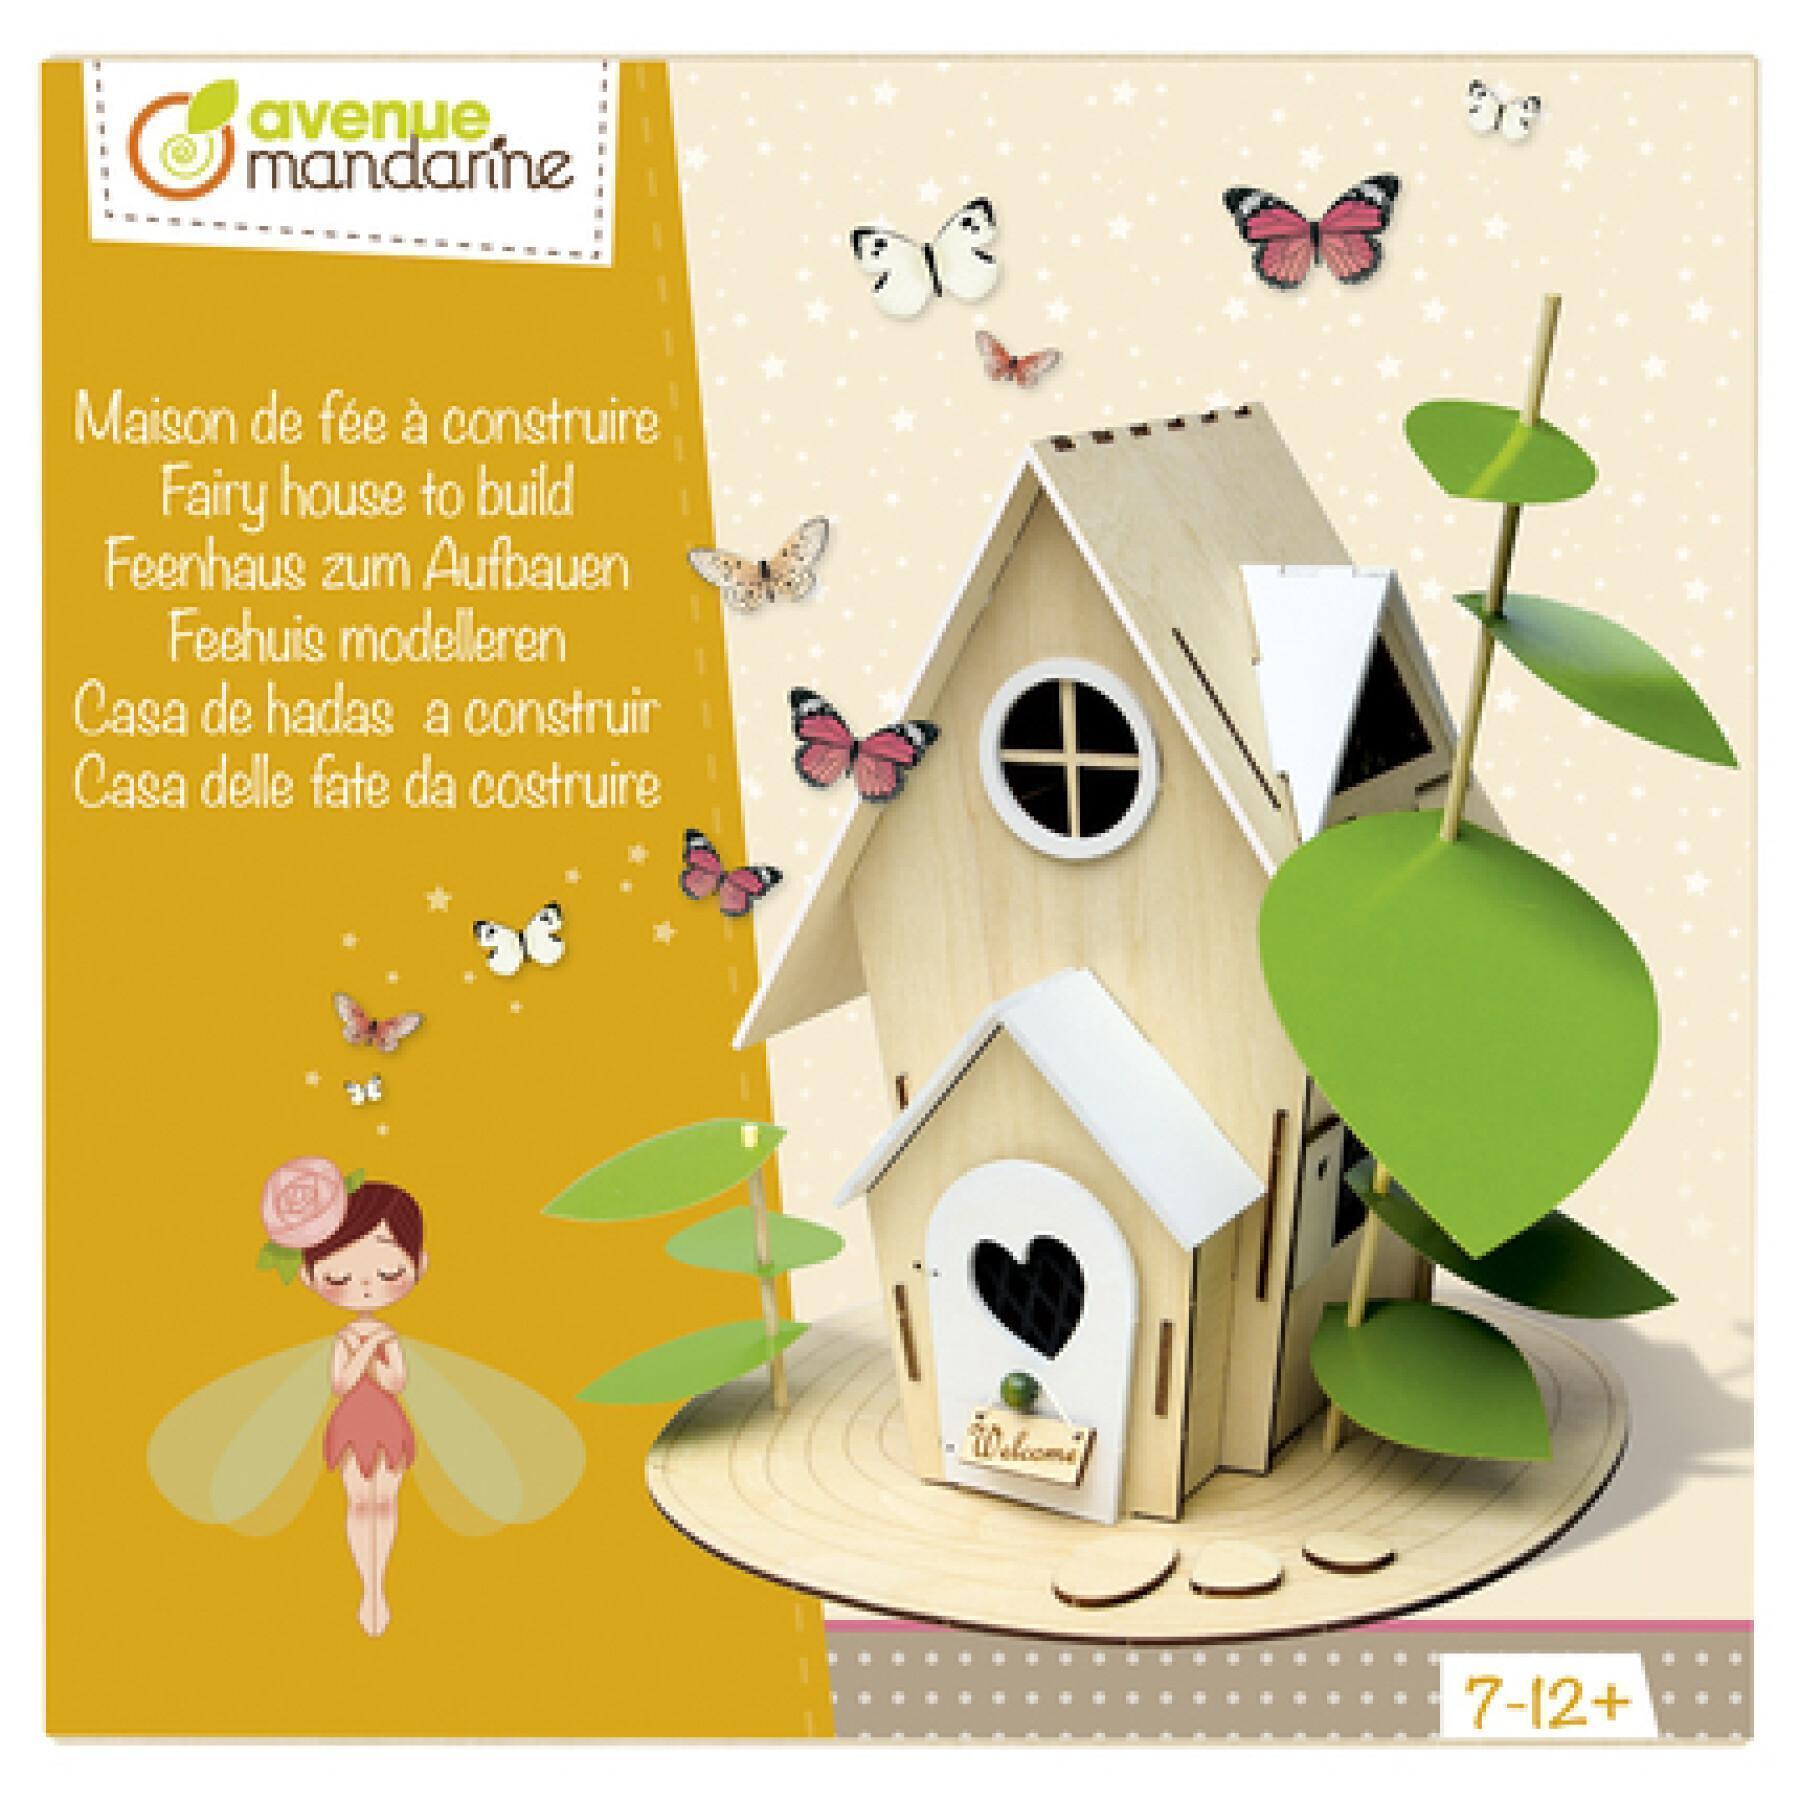 Creative fairy house set to build Avenue Mandarine